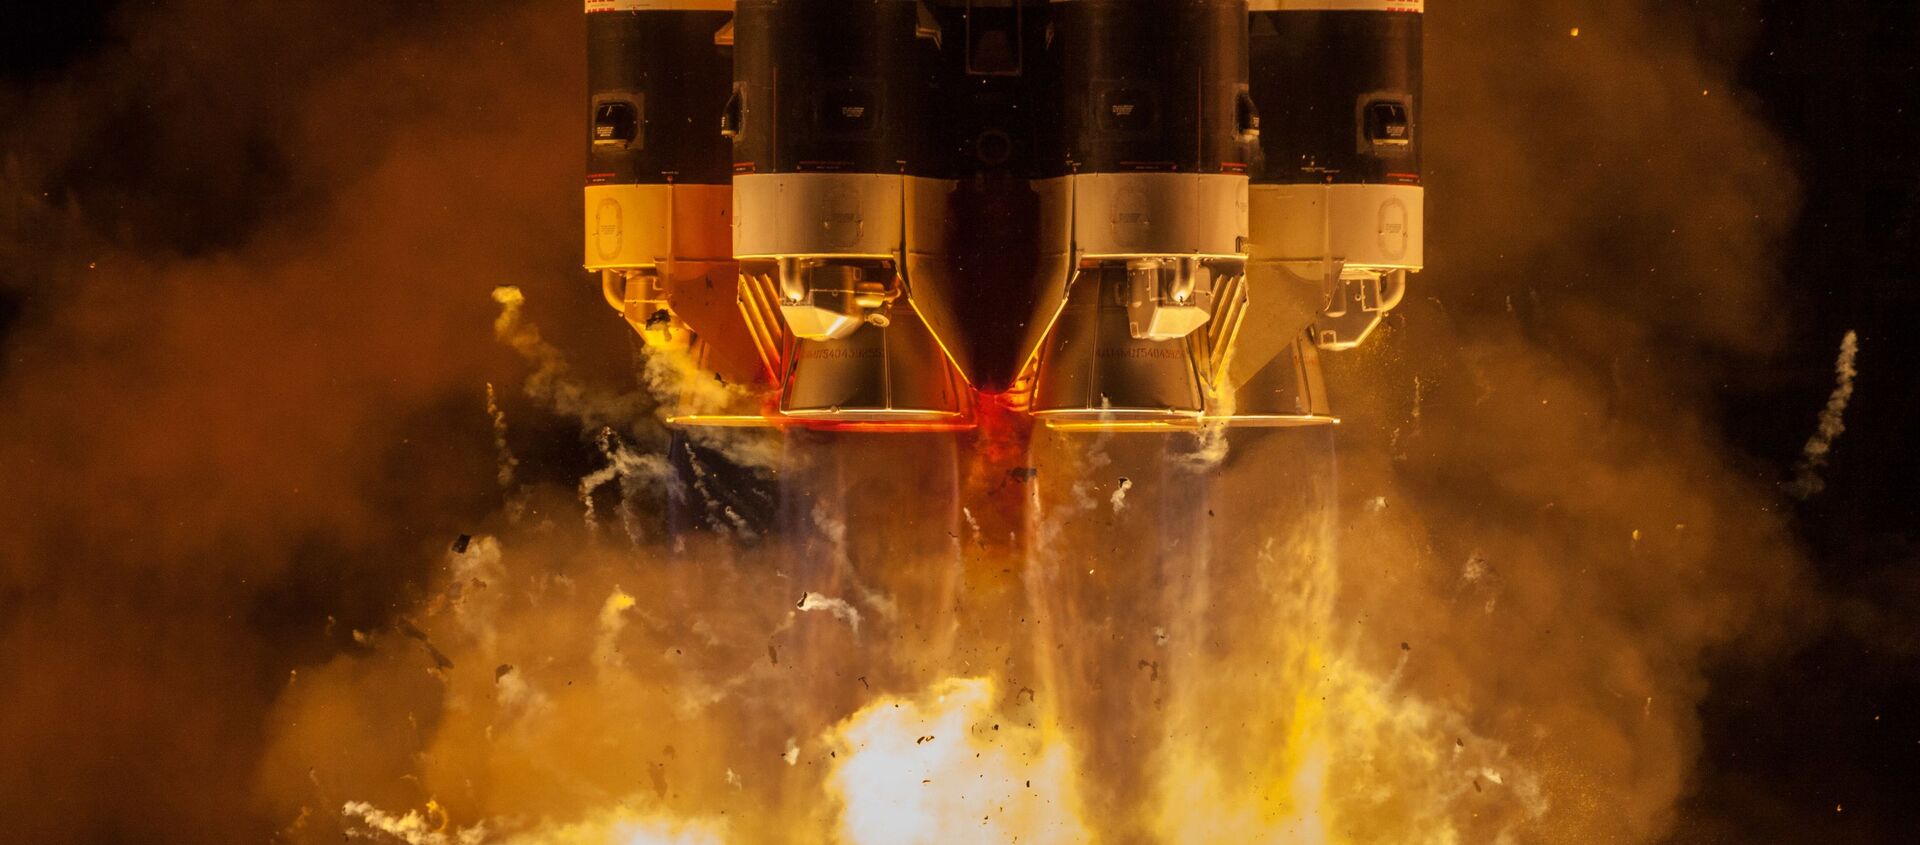 Запуск ракеты-носителя Протон-М с космодрома Байконур - Sputnik Молдова, 1920, 02.12.2020